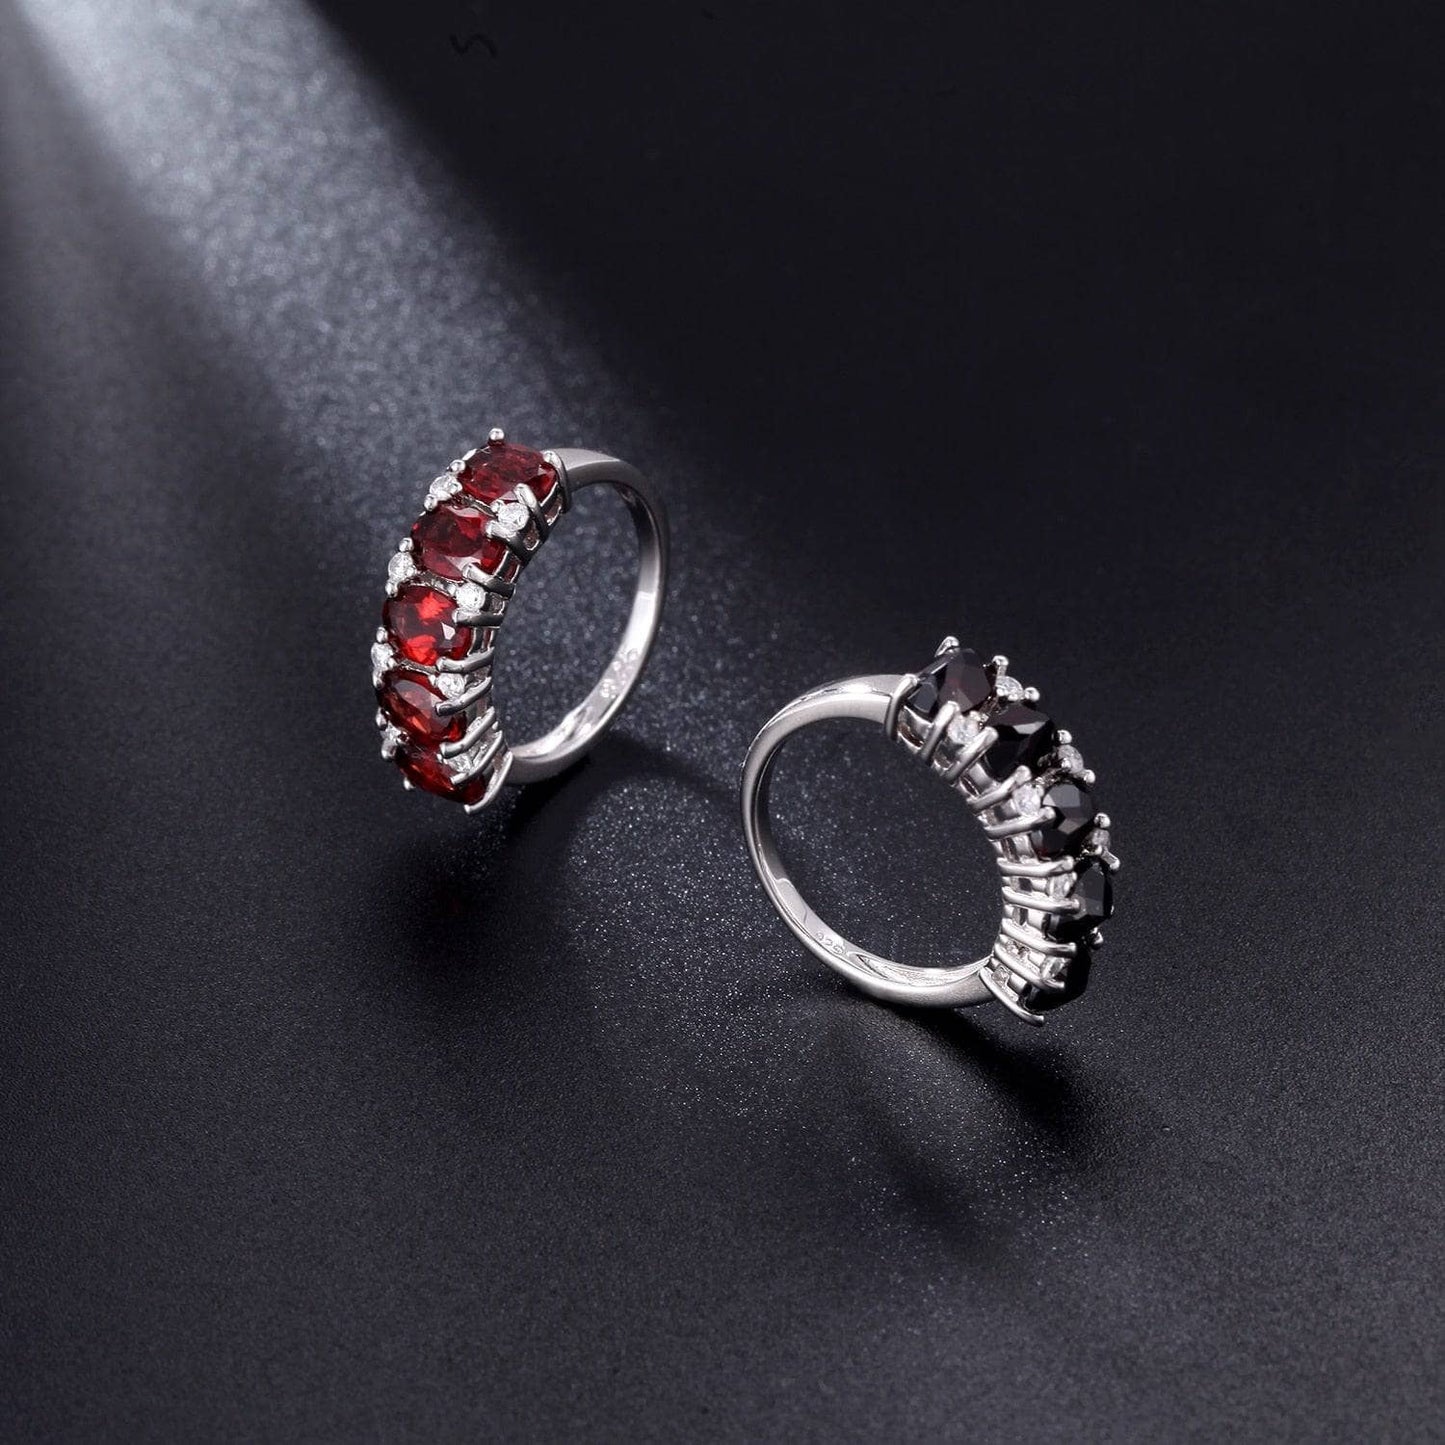 Natural Tourmaline Gemstone Wedding Ring Band - Black Diamonds New York